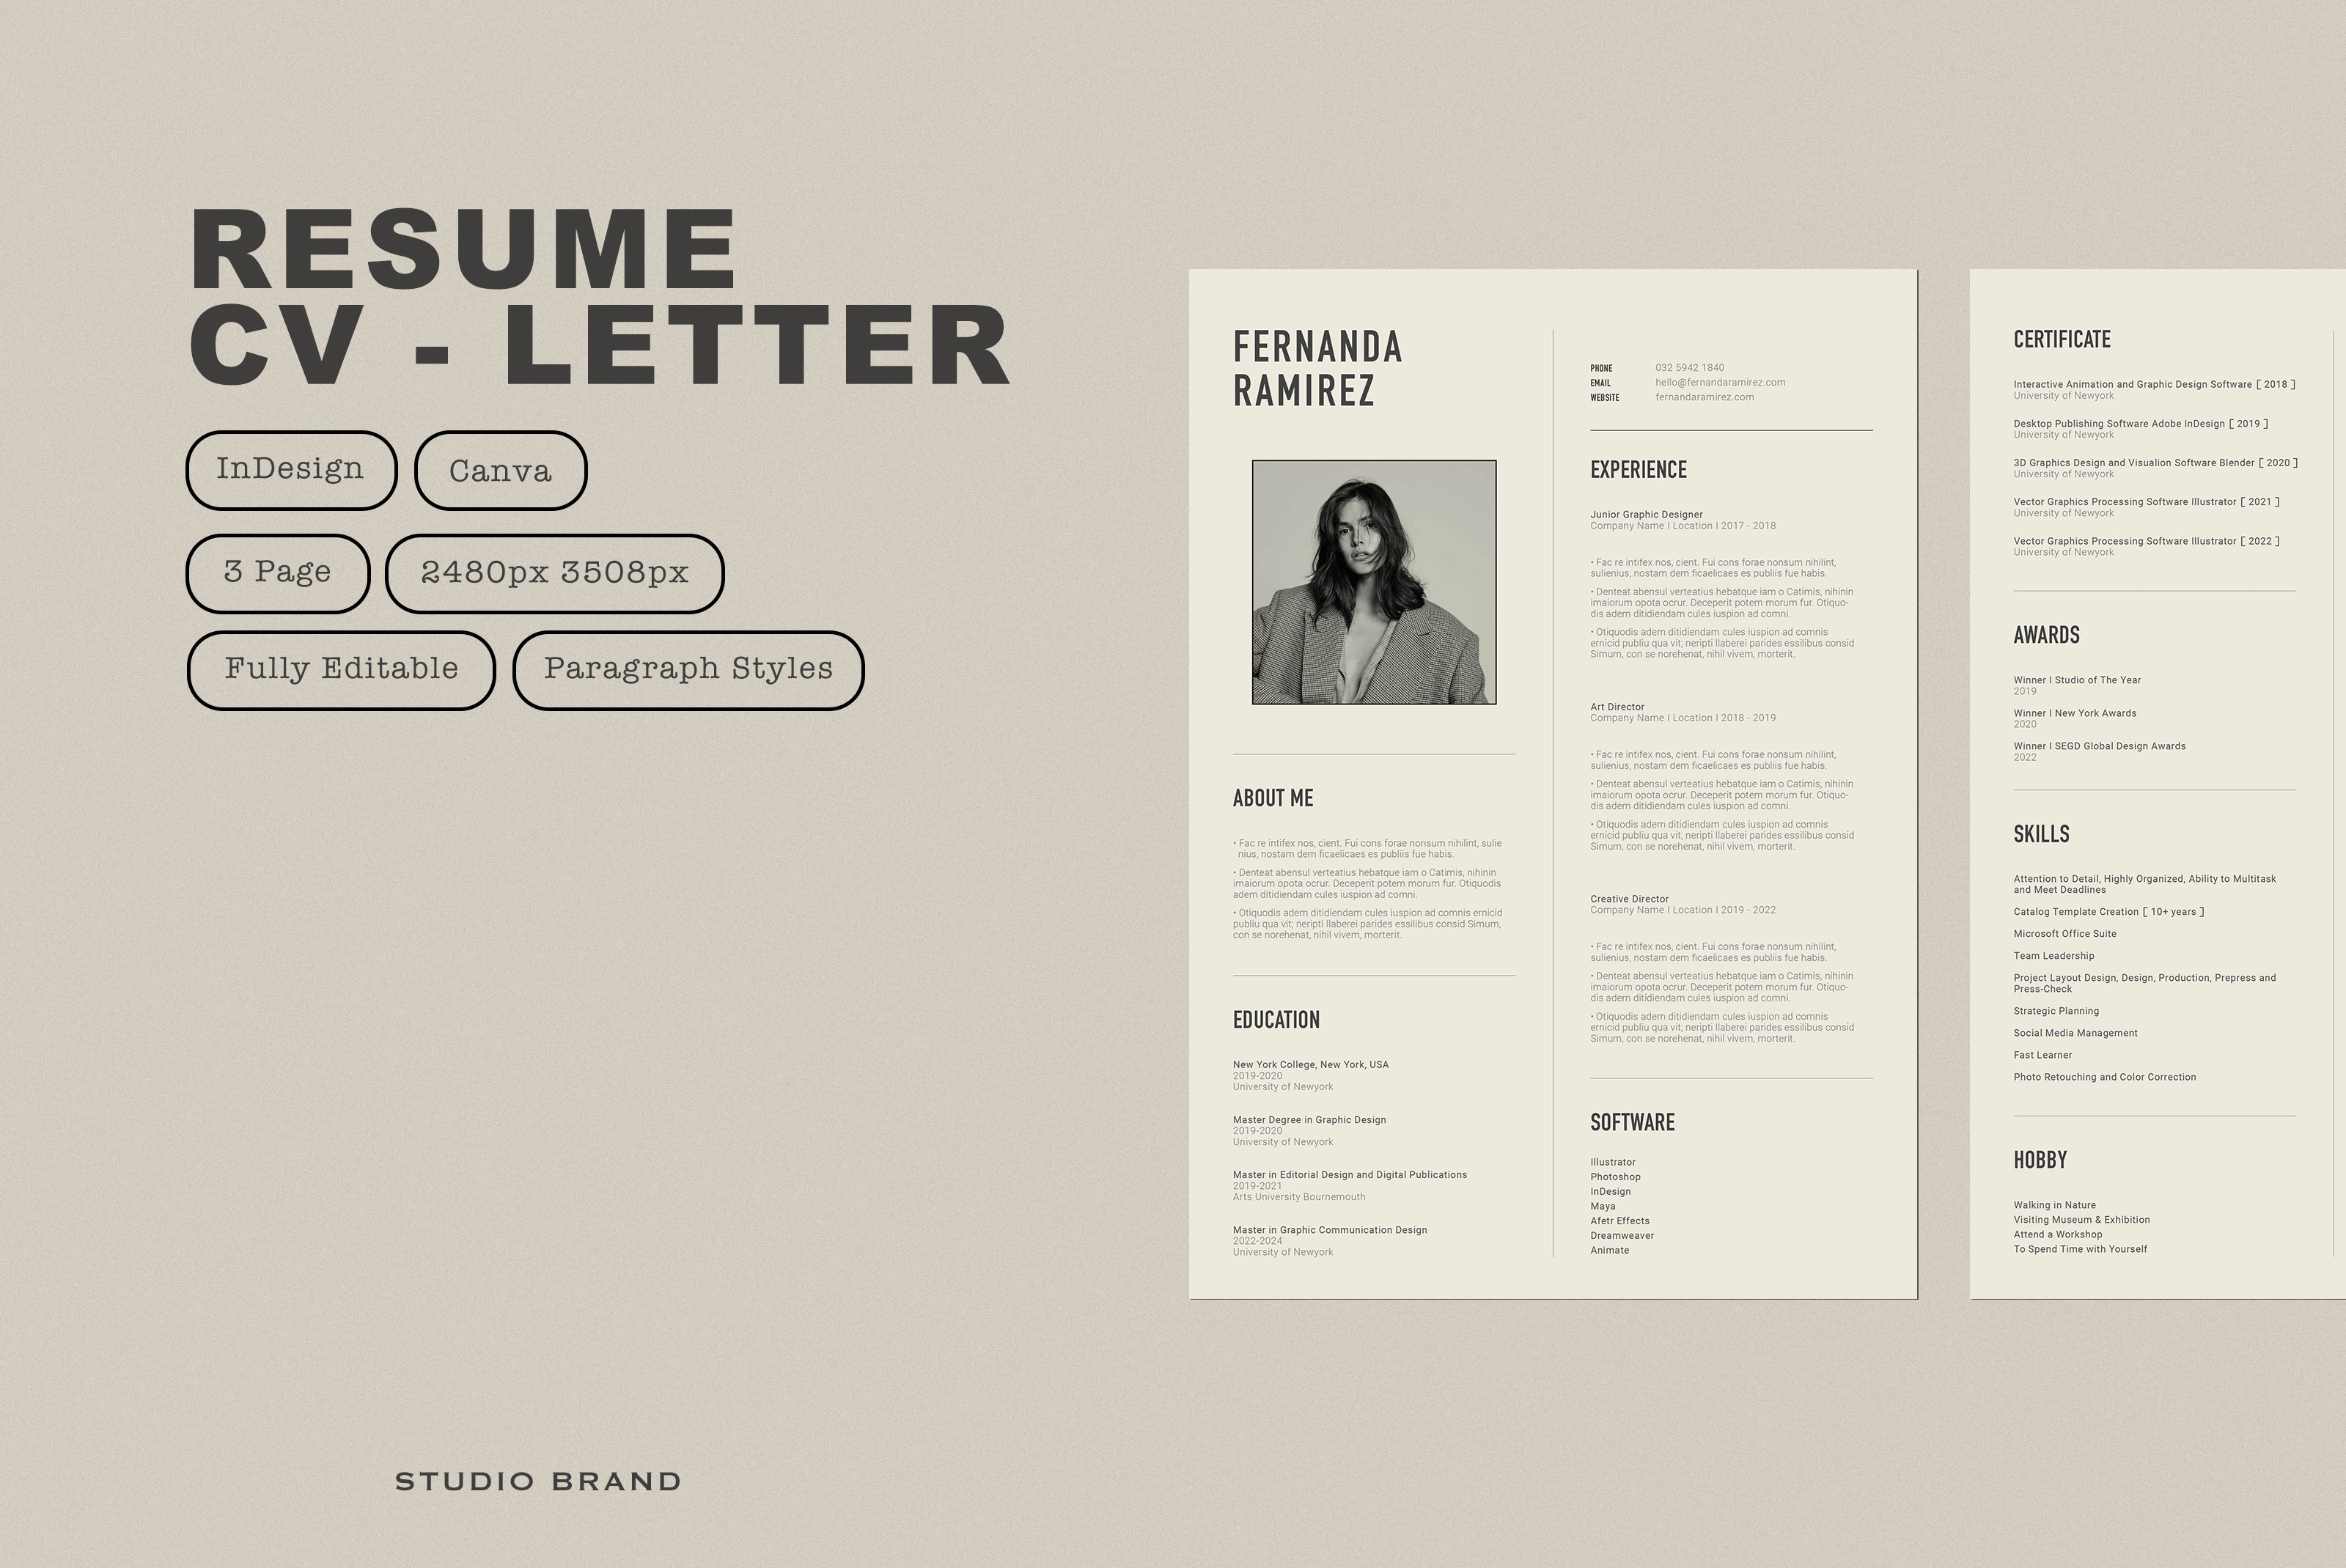 COS I Resume - CV - Letter cover image.